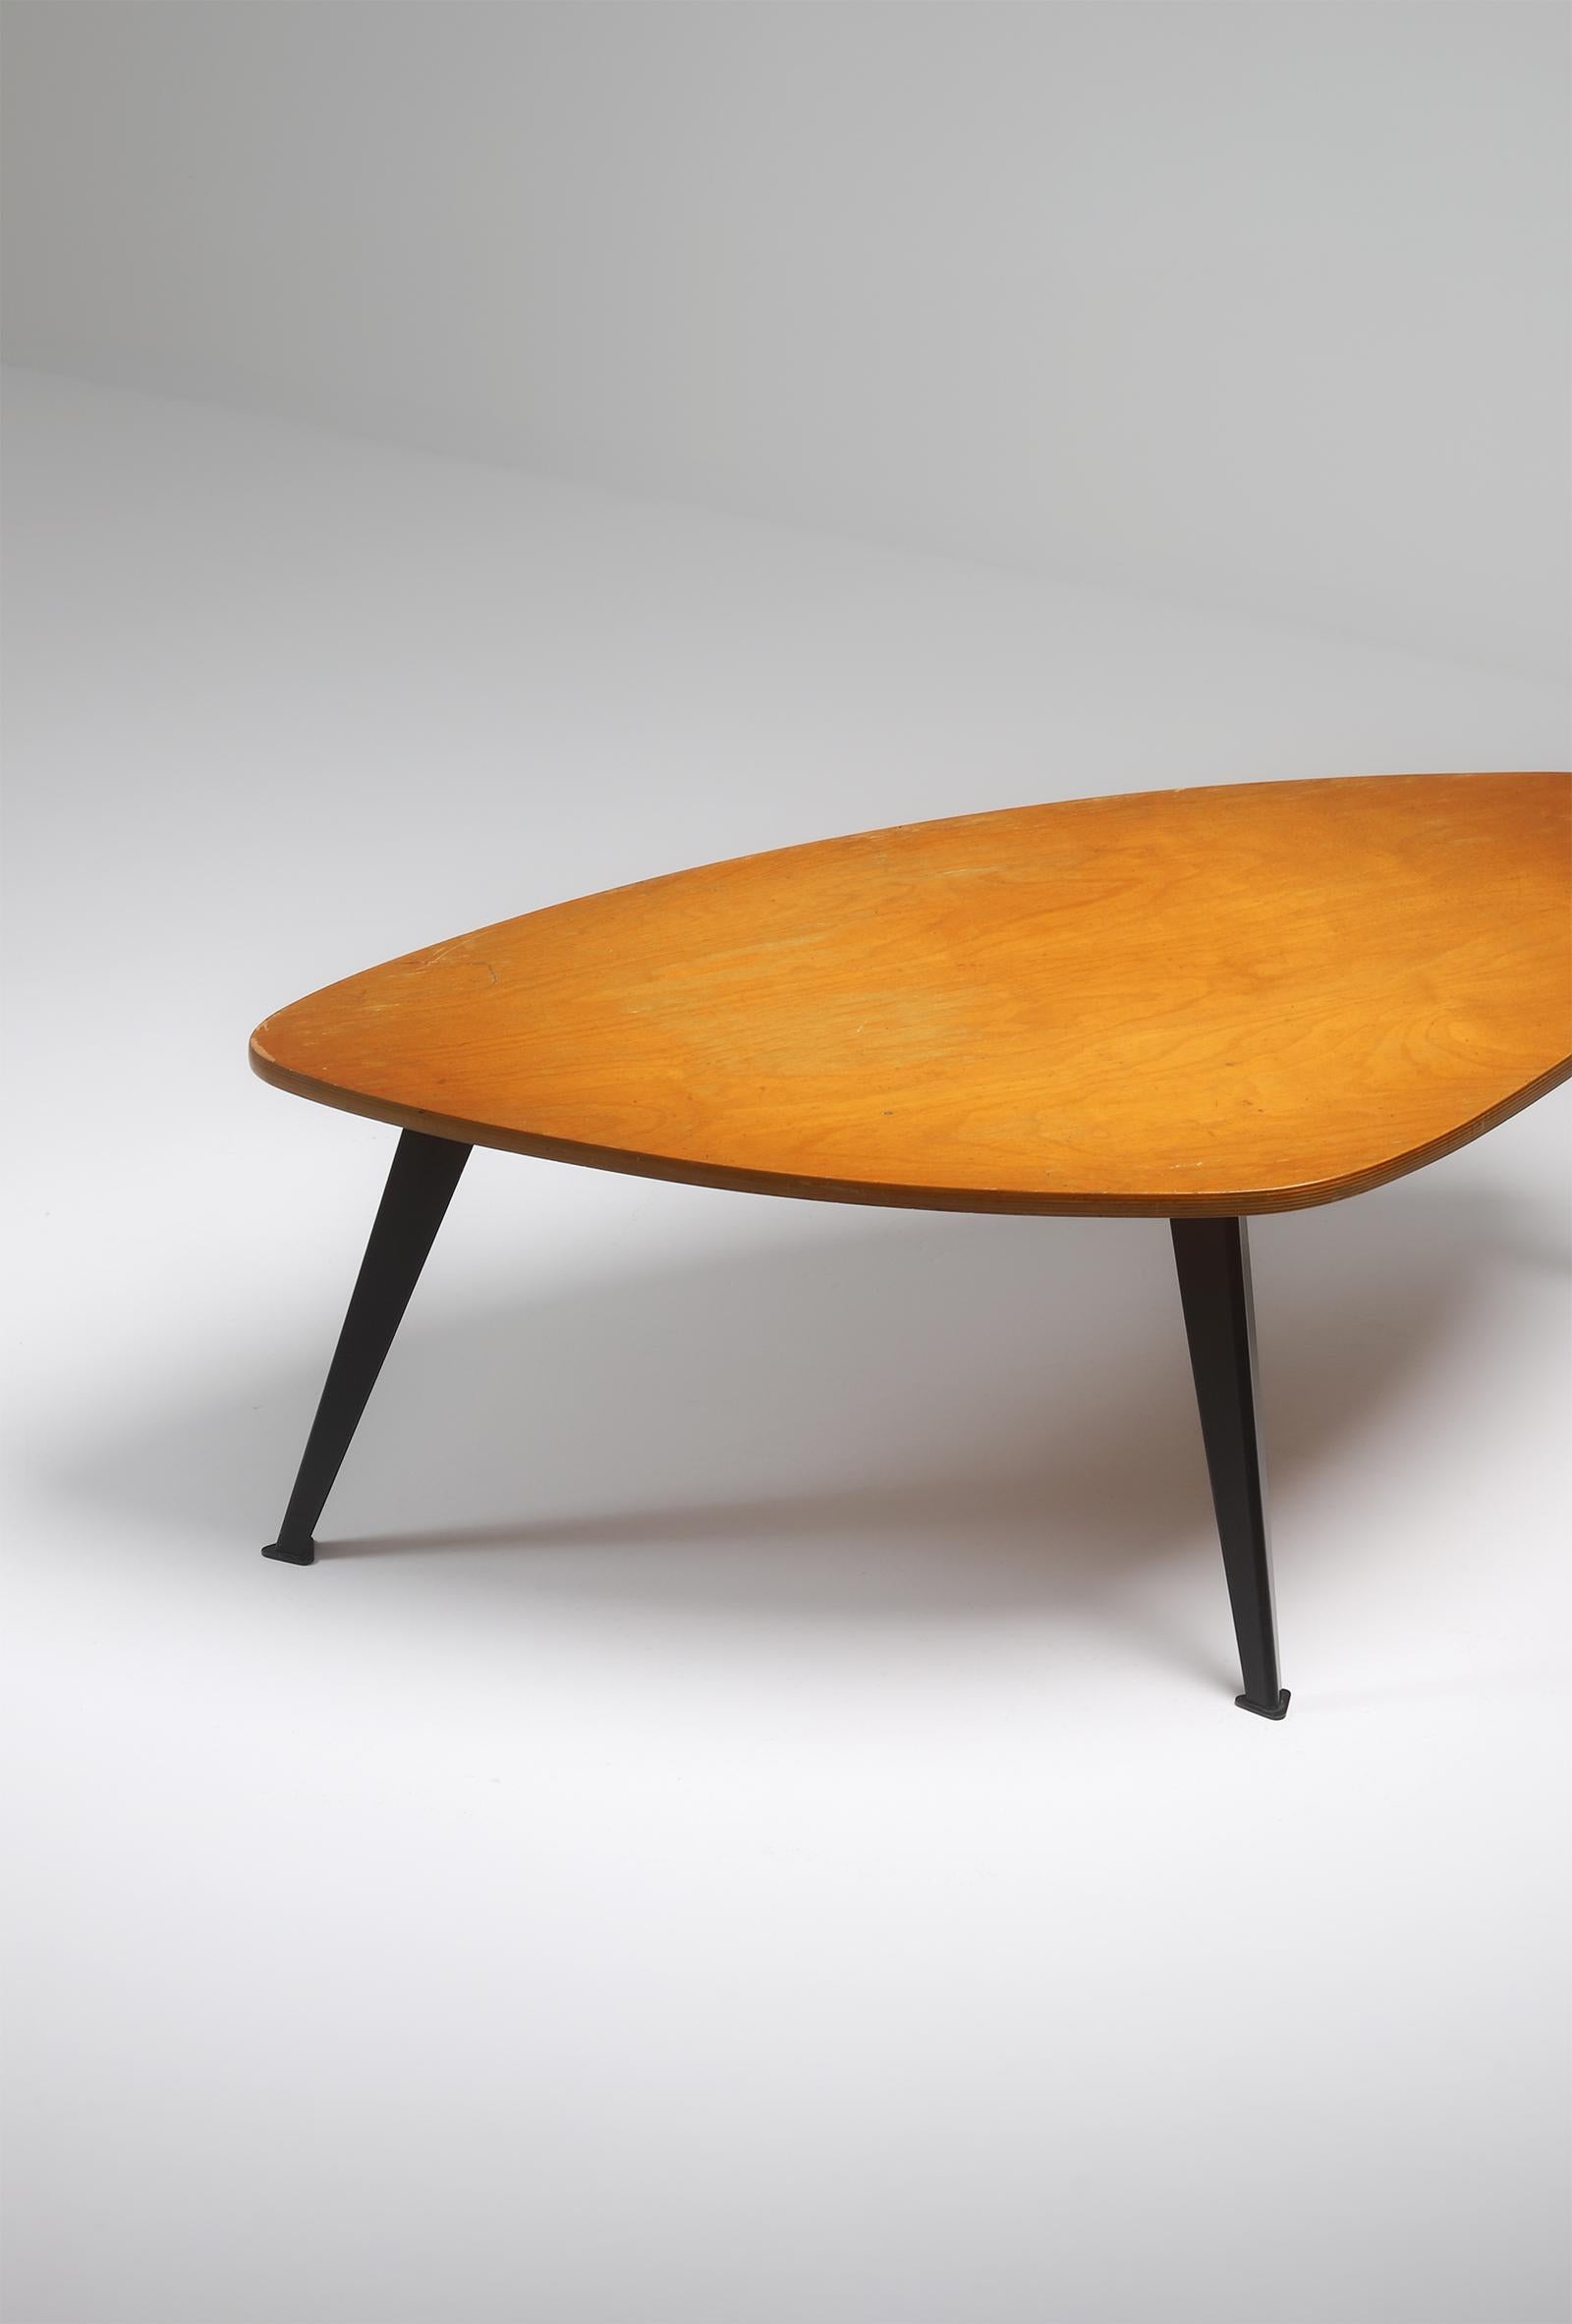 Post-Modern Mid-century modern wooden Coffee Table by Willy Van Der Meeren 1950s